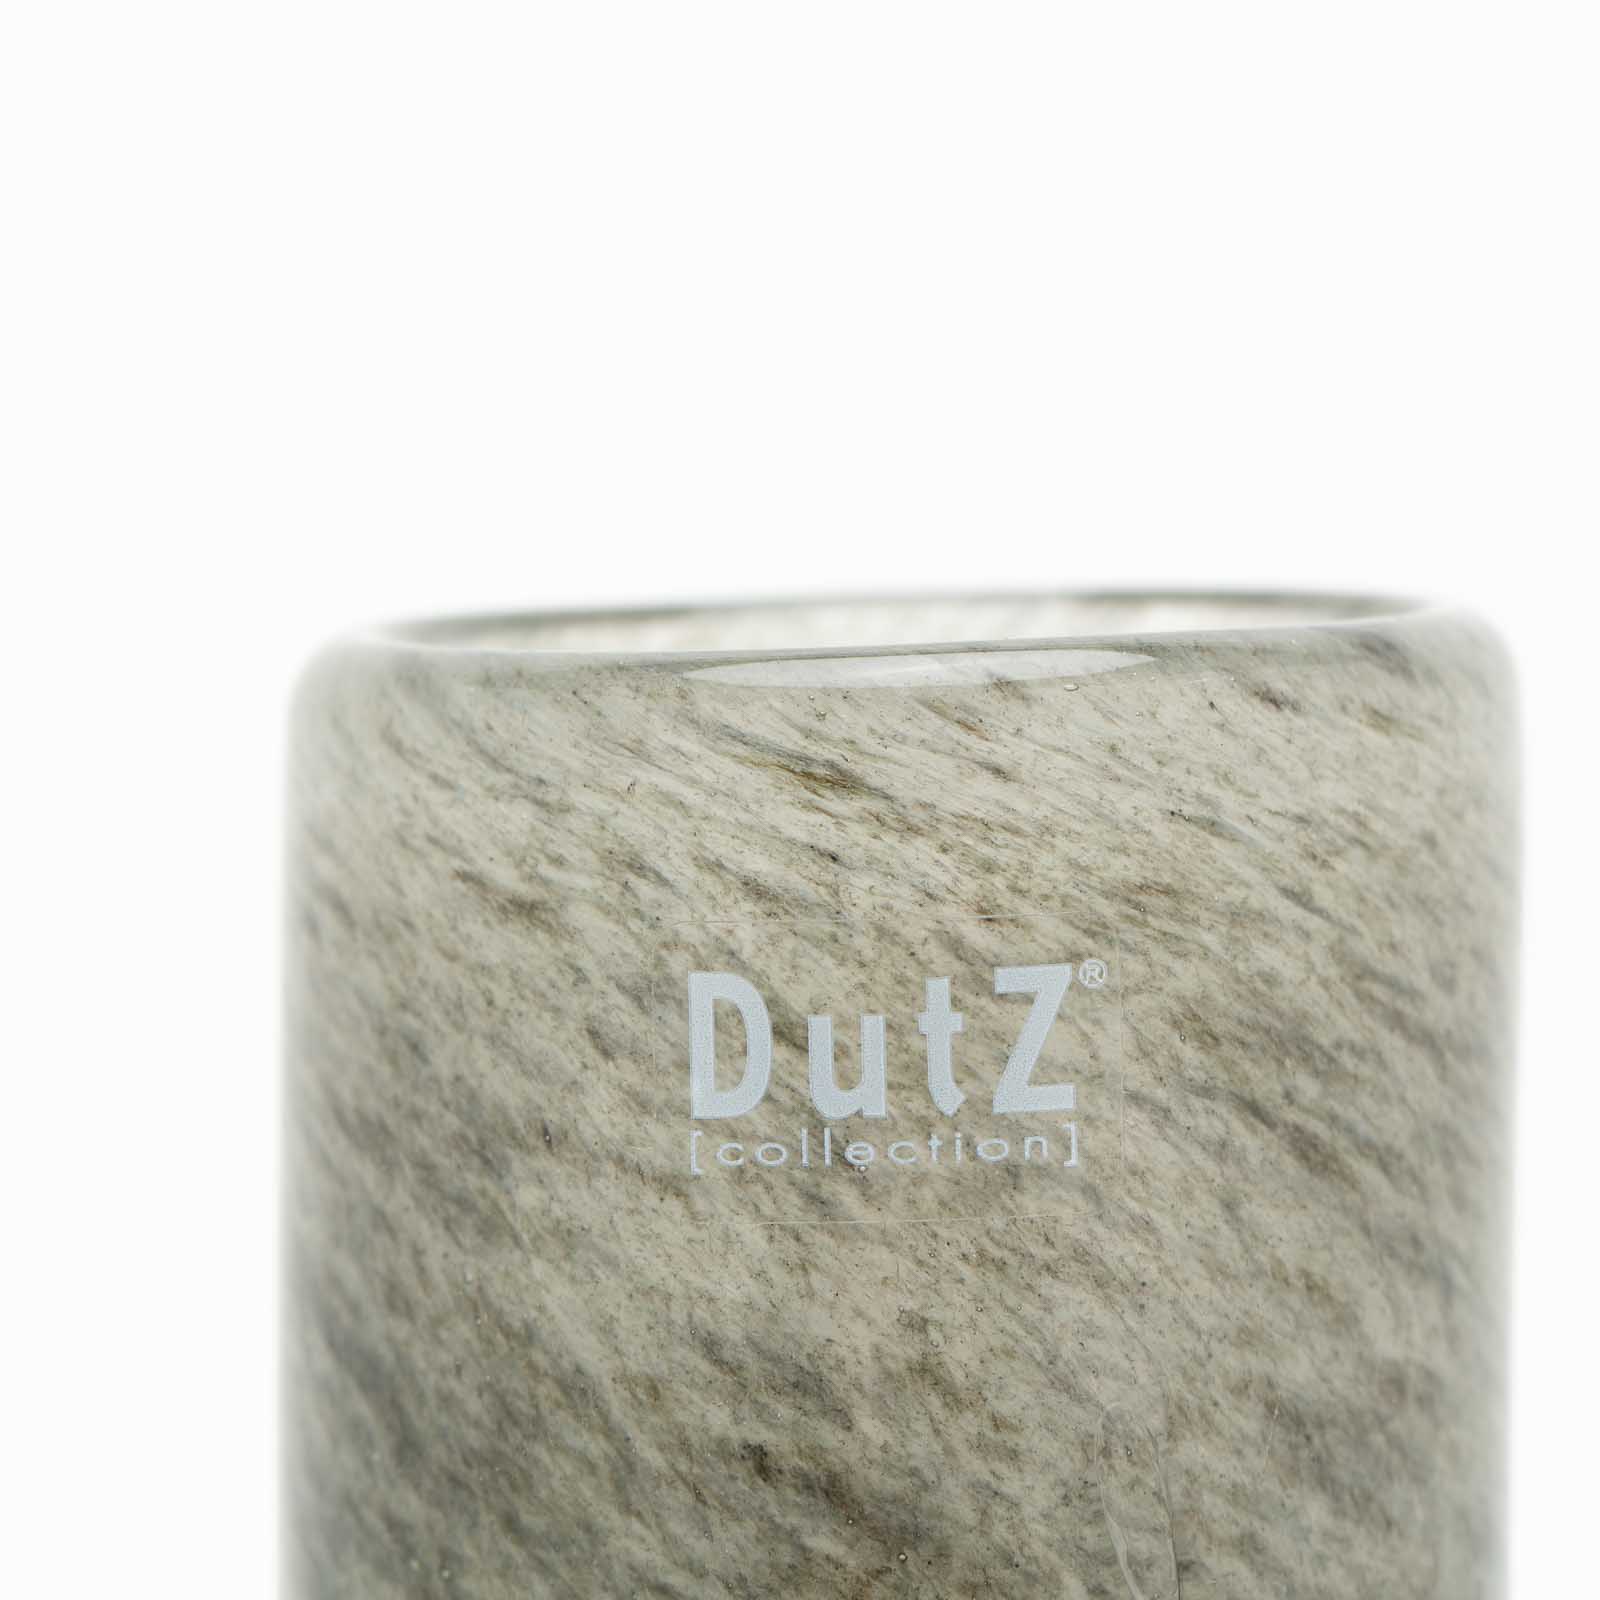 DutZ Cylinder, newgrey